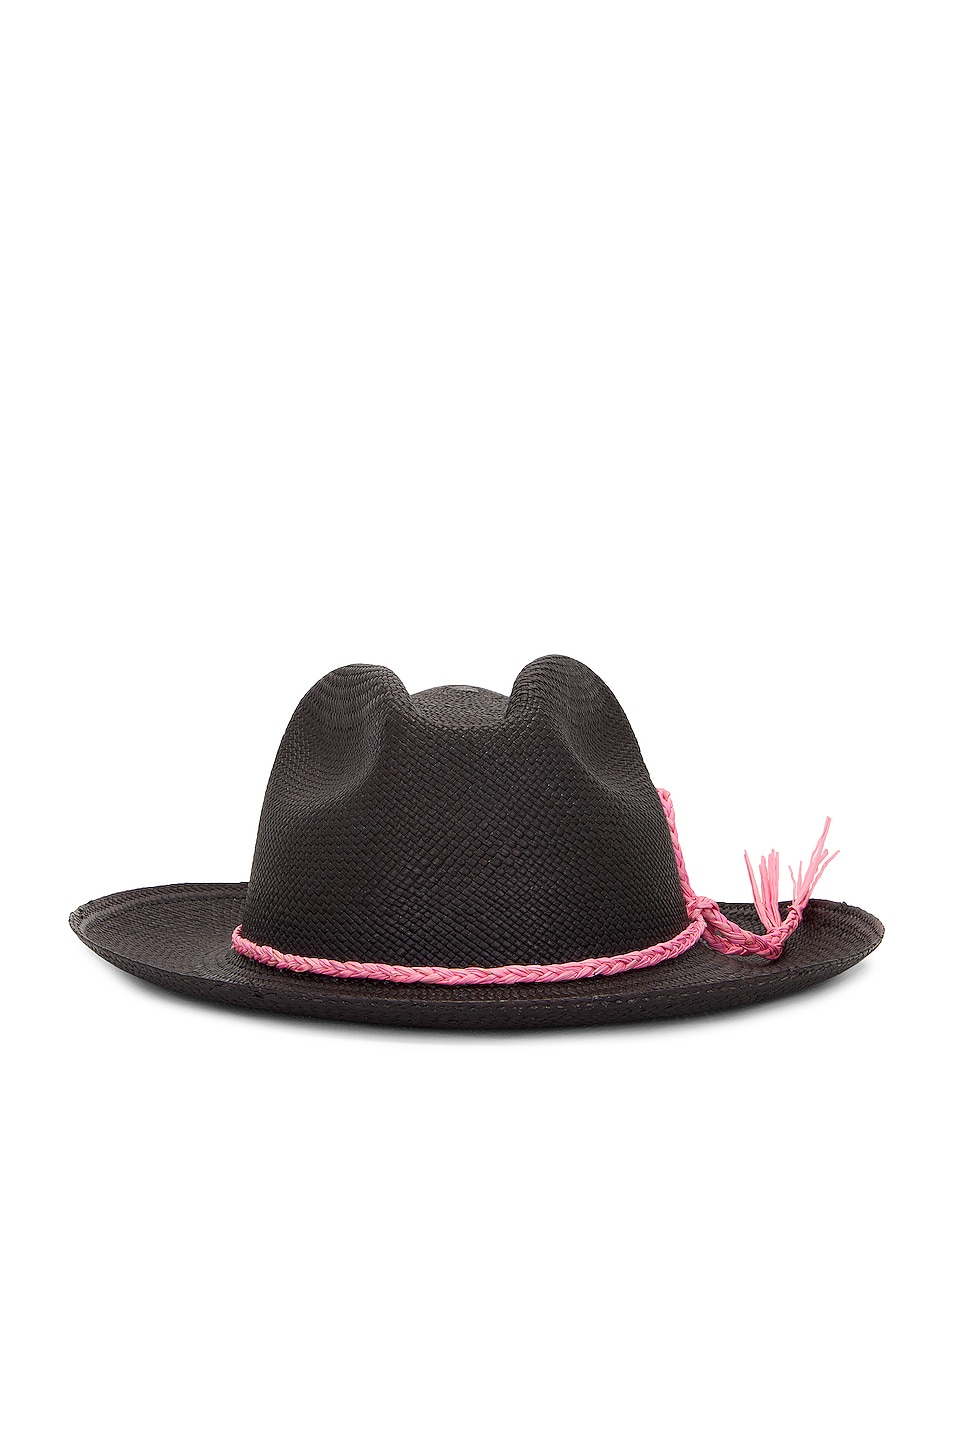 Provins Hat in Black